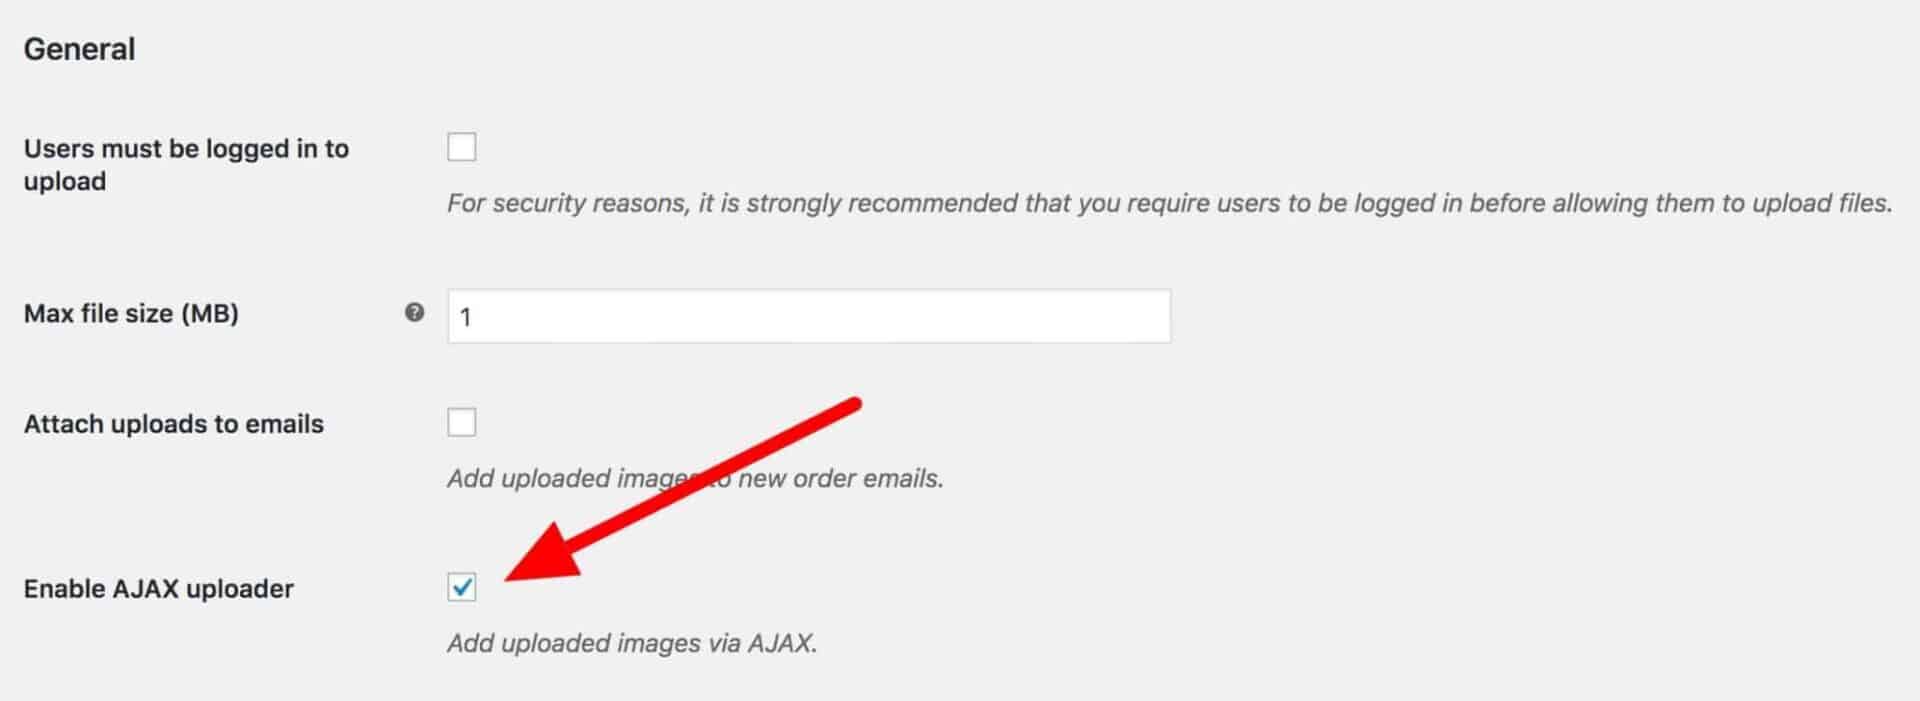 The Enable AJAX uploader checkbox.